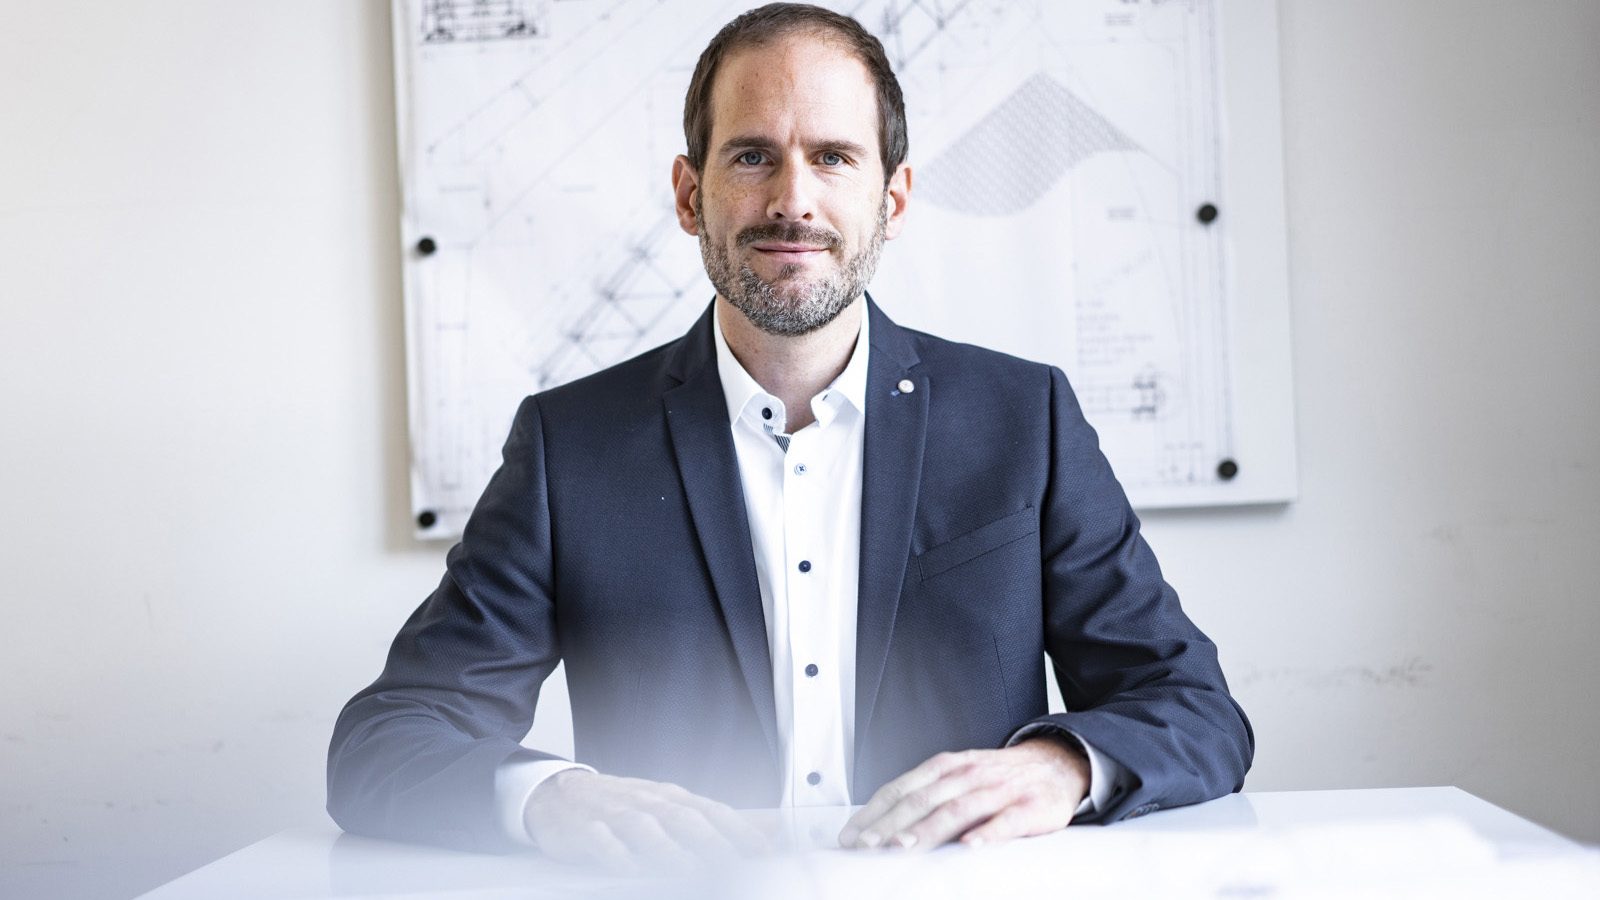 EXPOSE Corporate Photo | Thorsten Schmidtkord für Patentanwälte.